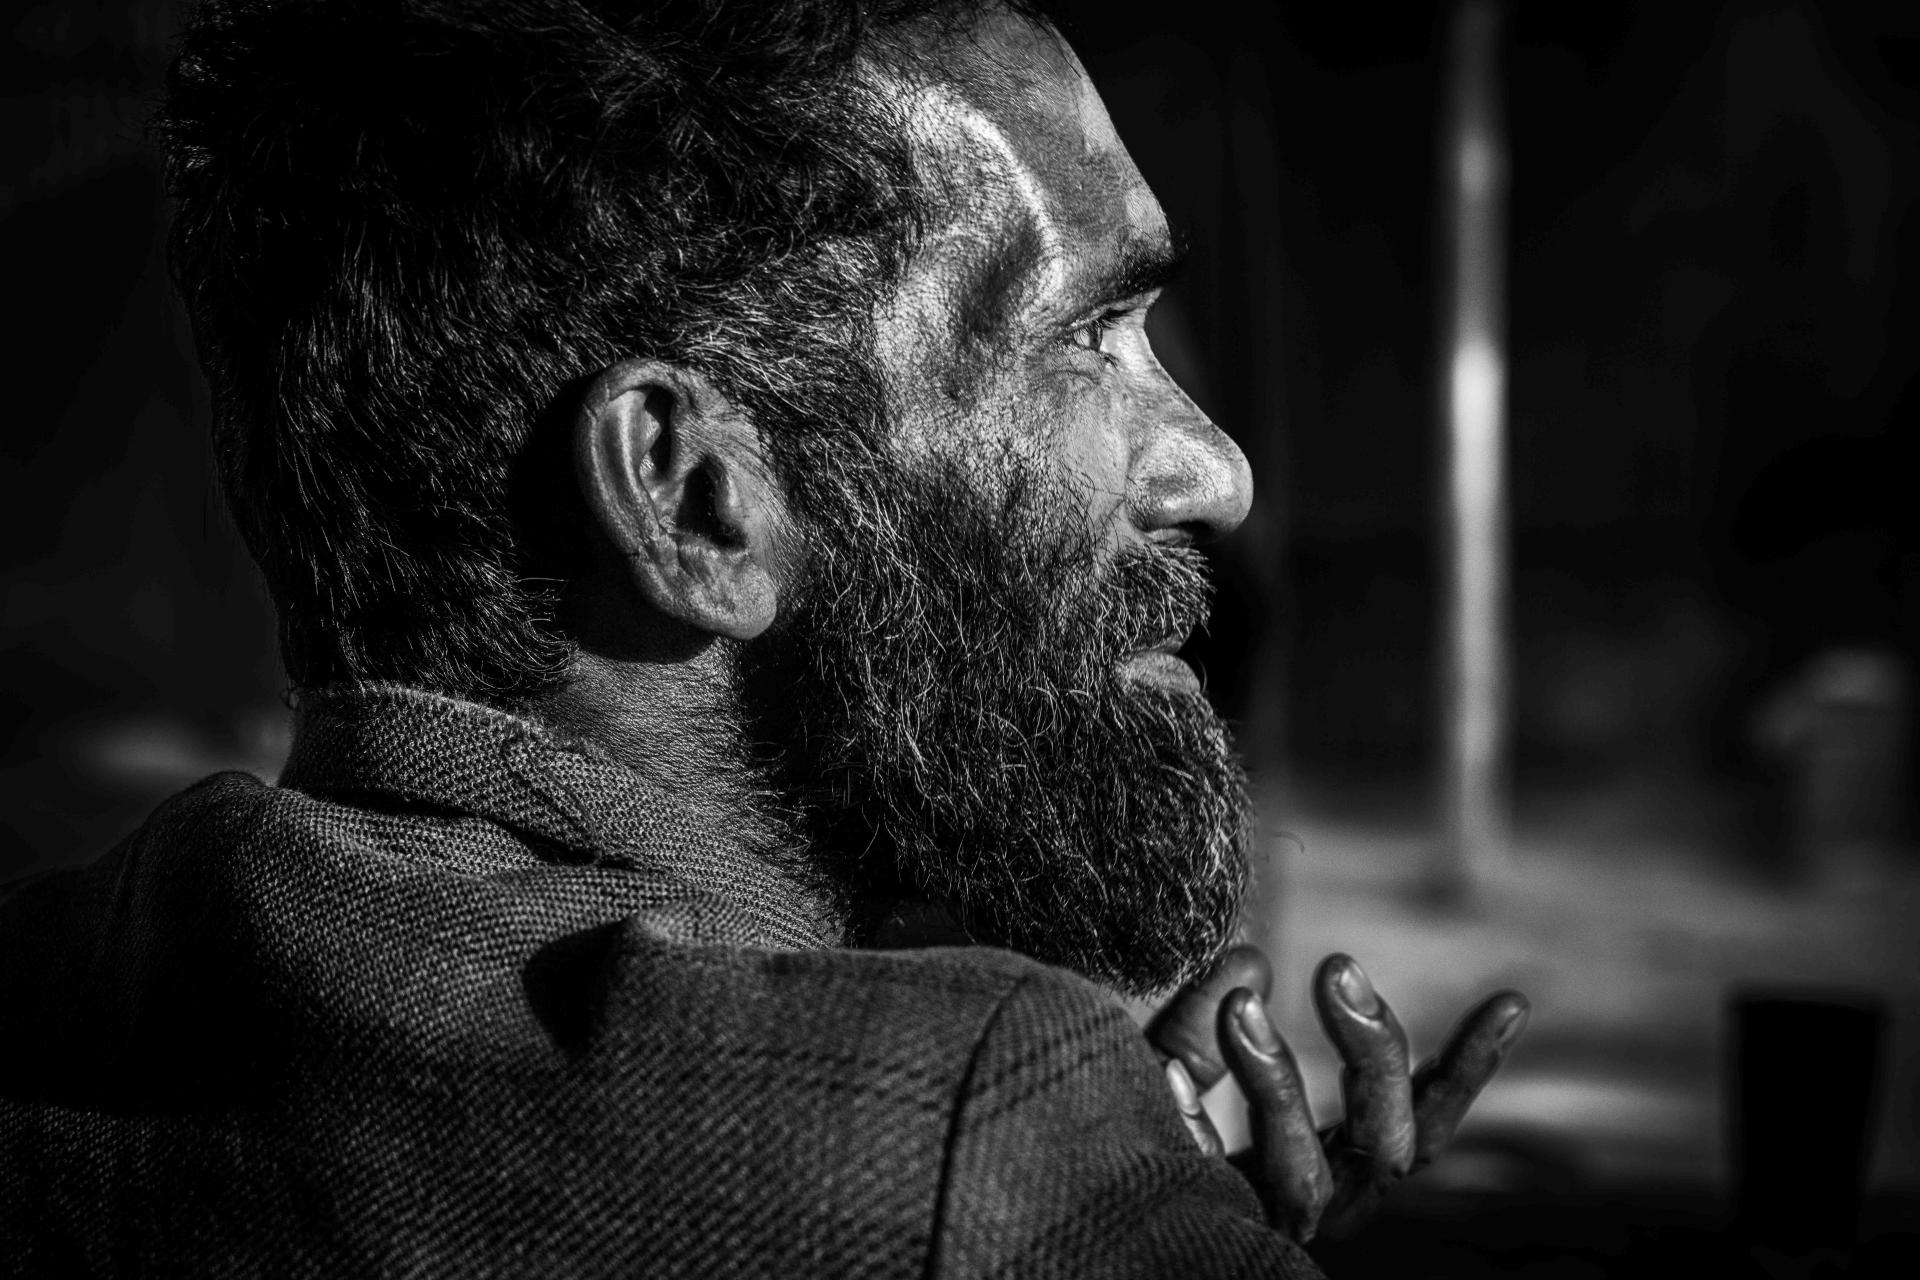 European Photography Awards Winner - Humans of Dhaka